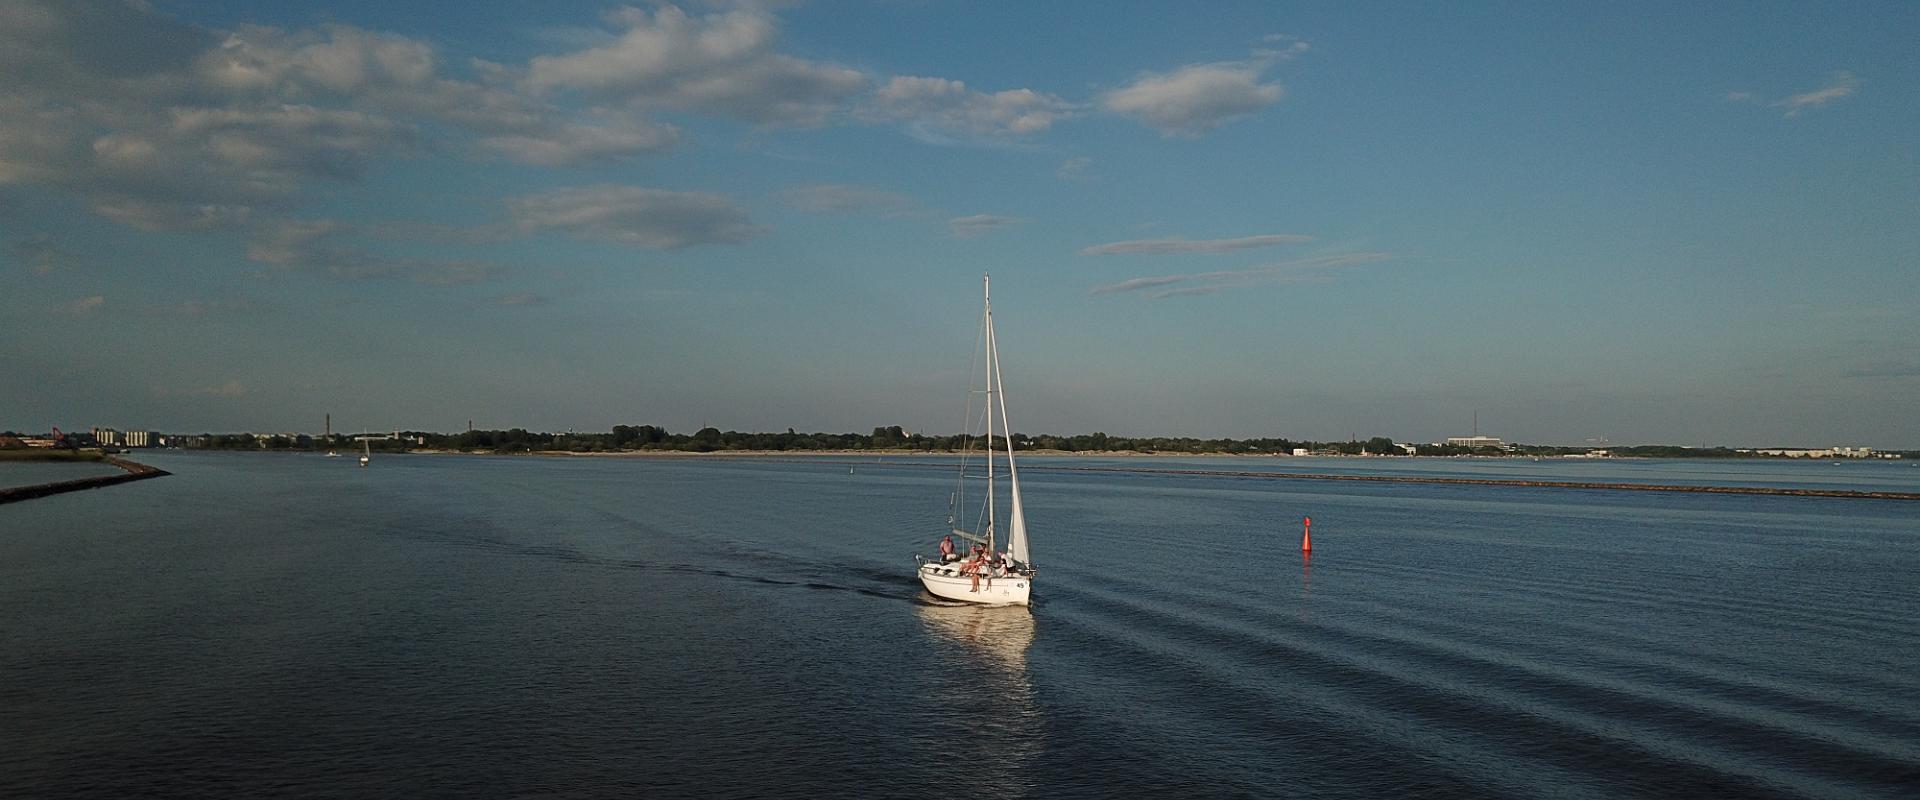 Seikle Vabaks sailing around Pärnu Bay